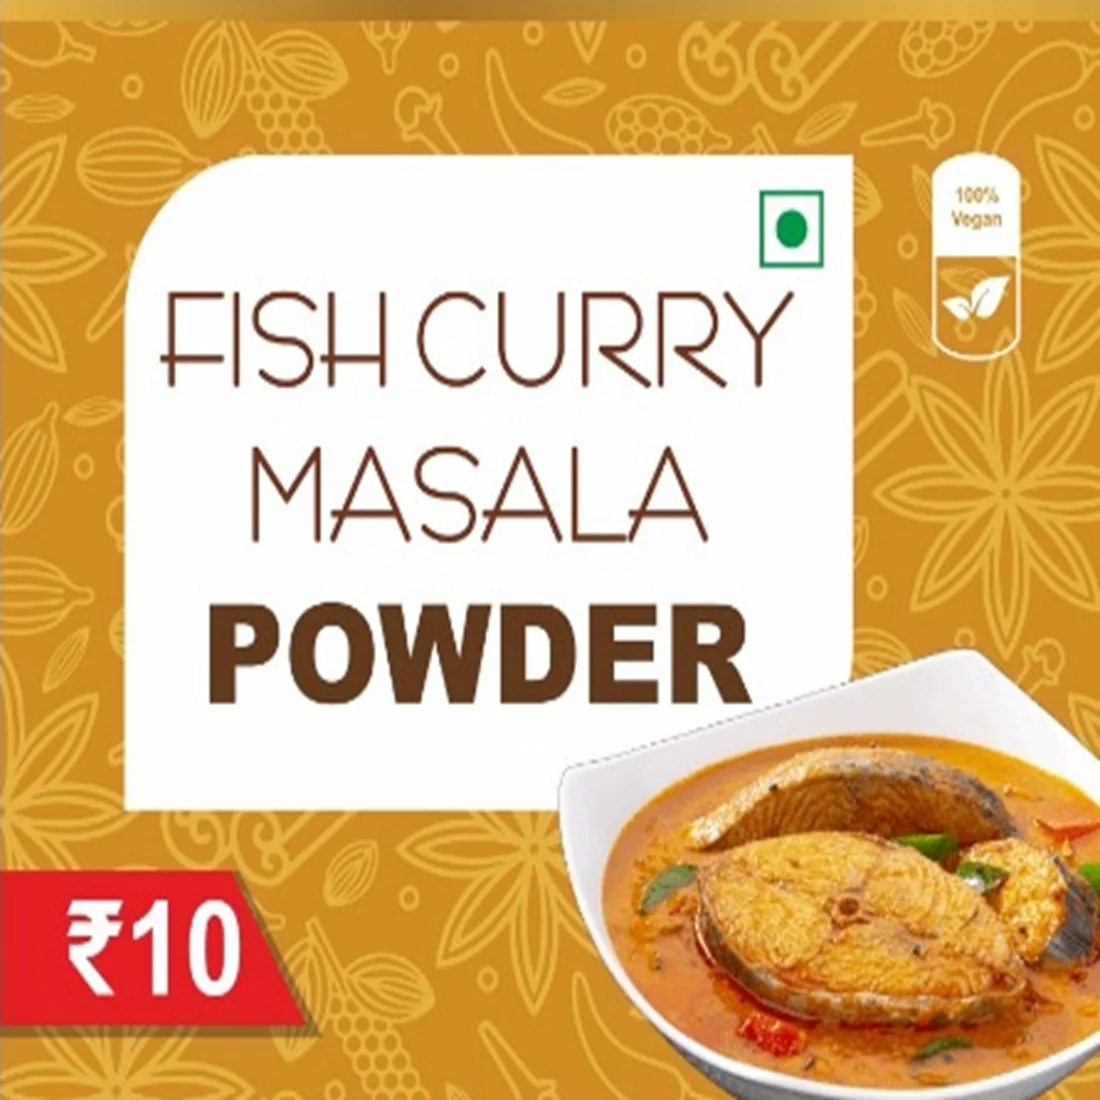 Fish Curry masala powder